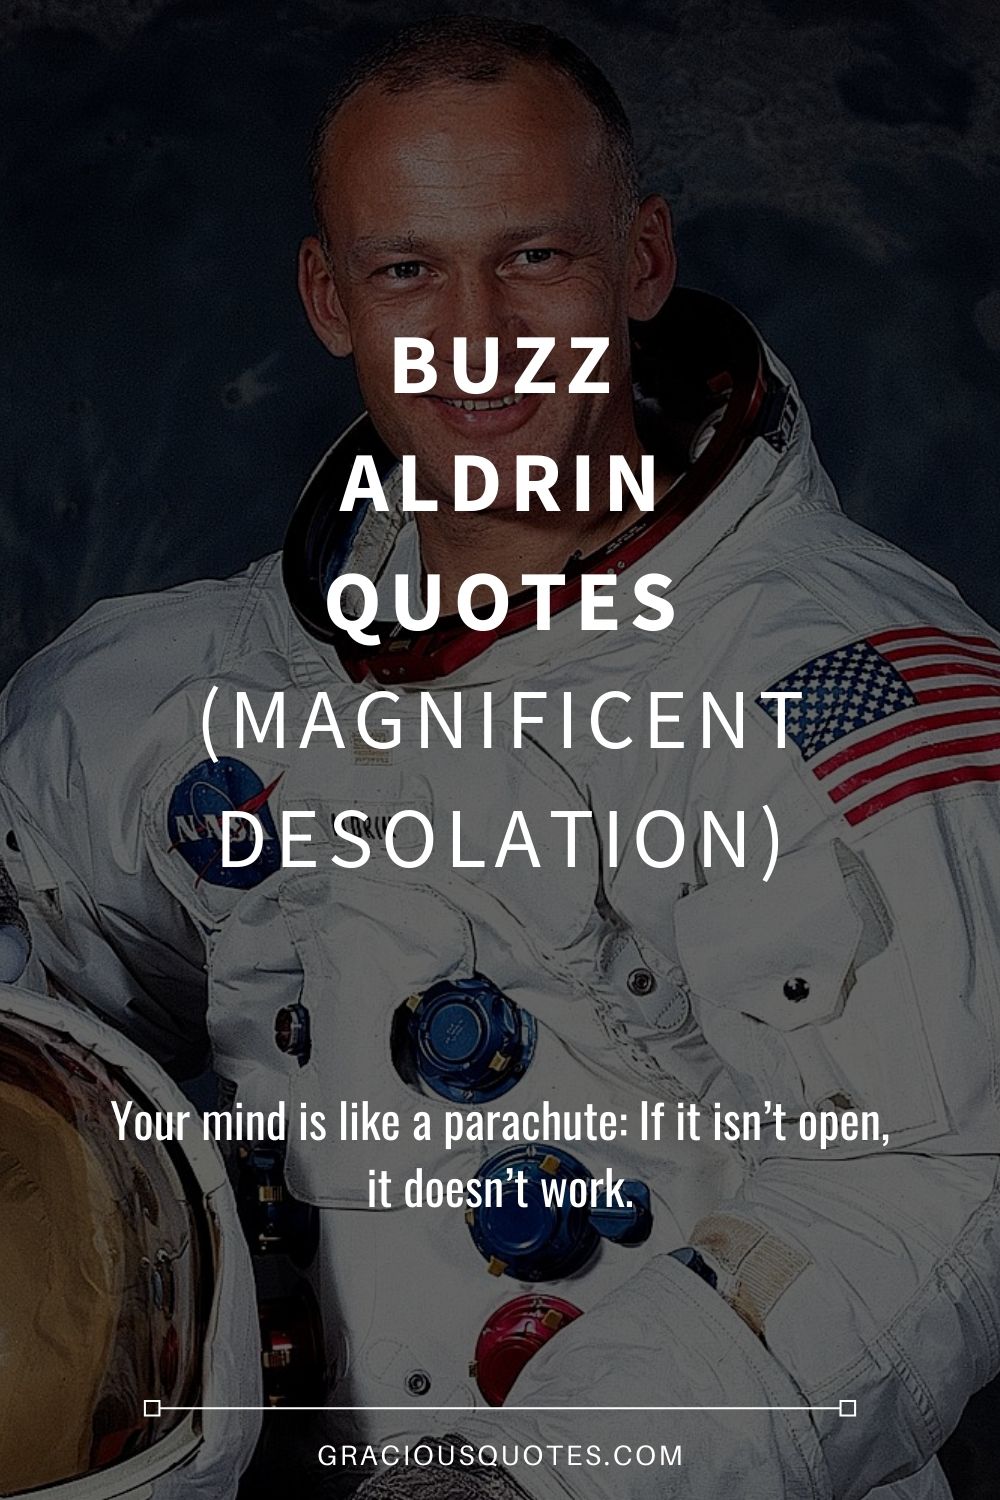 Buzz Aldrin Quotes (MAGNIFICENT DESOLATION) - Gracious Quotes